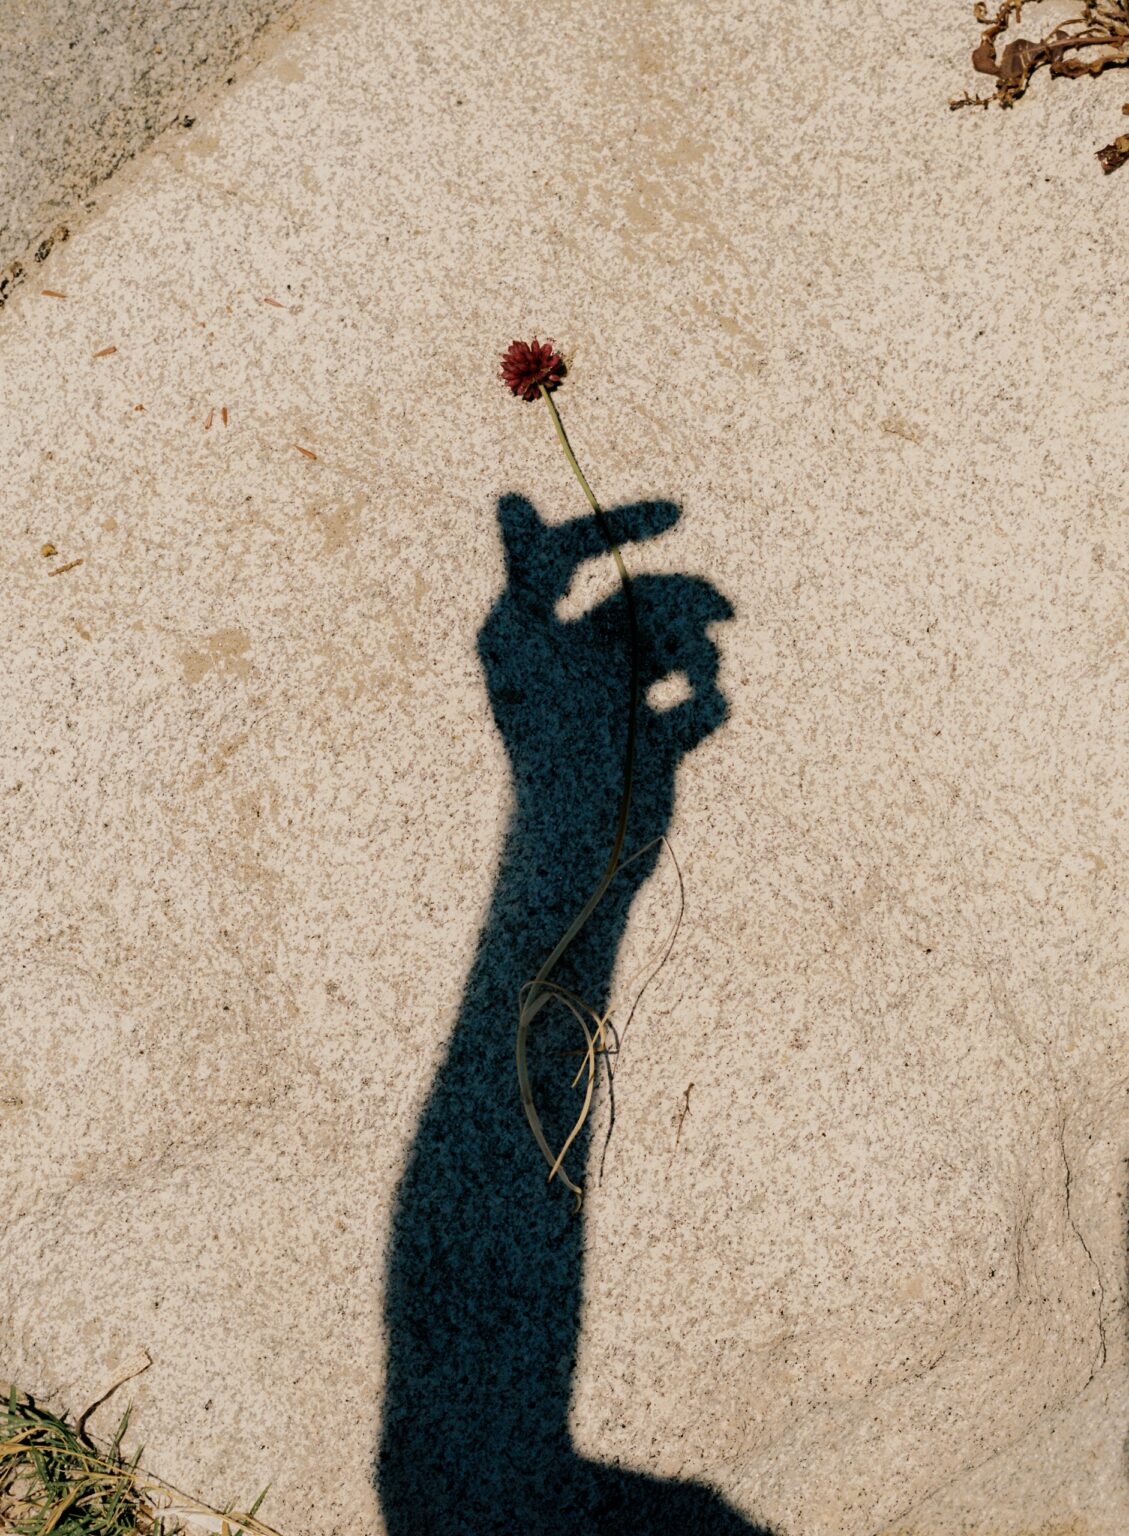 Shadow of hand holding flower on sidewalk